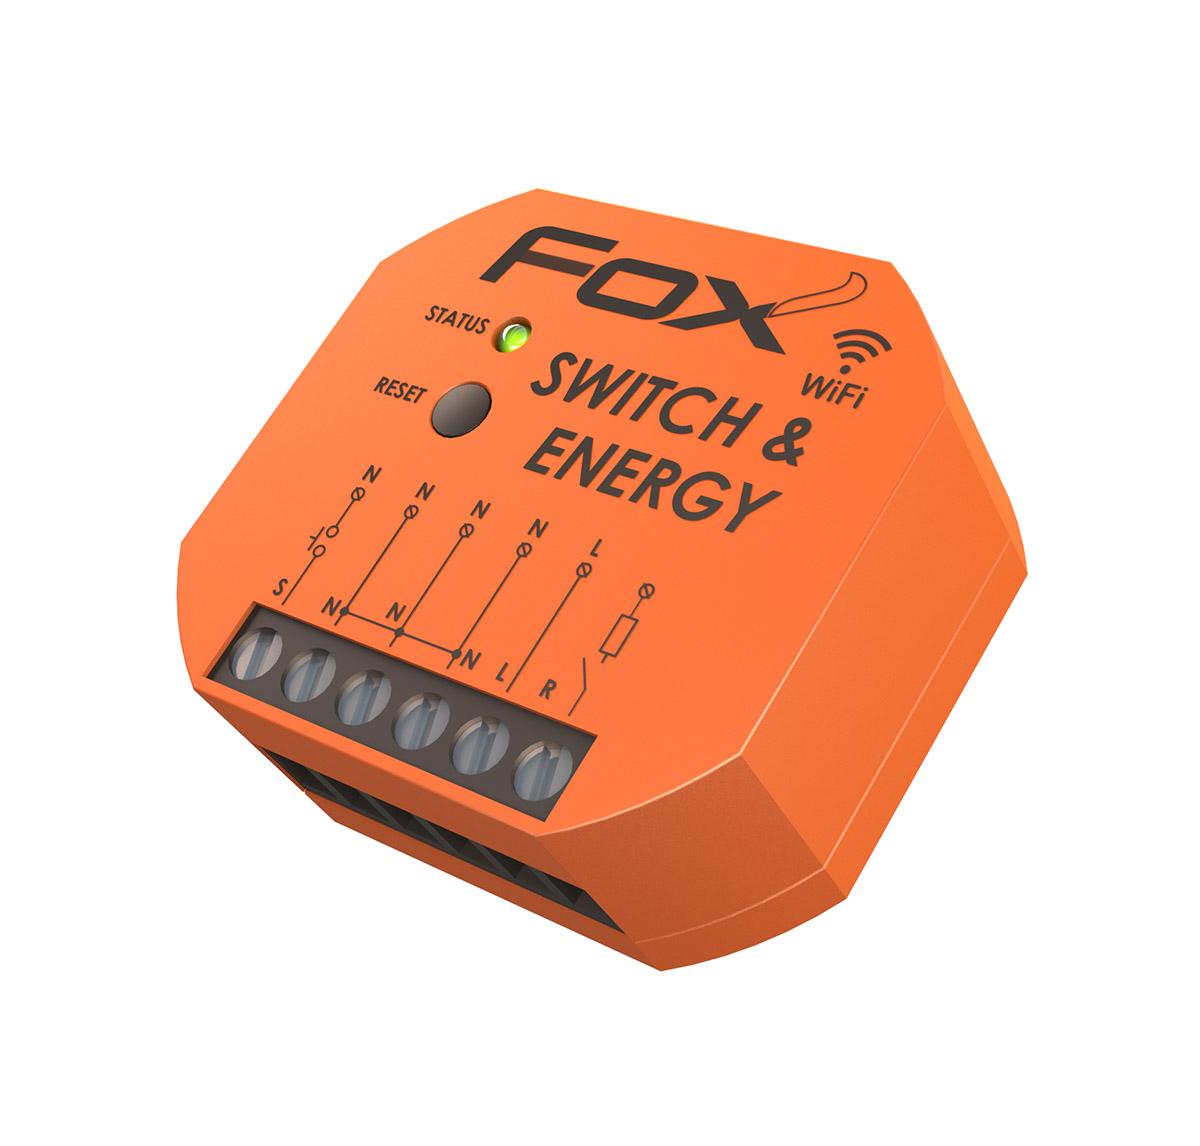 https://www.fif.com.pl/4622/switch-energy-230-v-wi-fi-relay.jpg